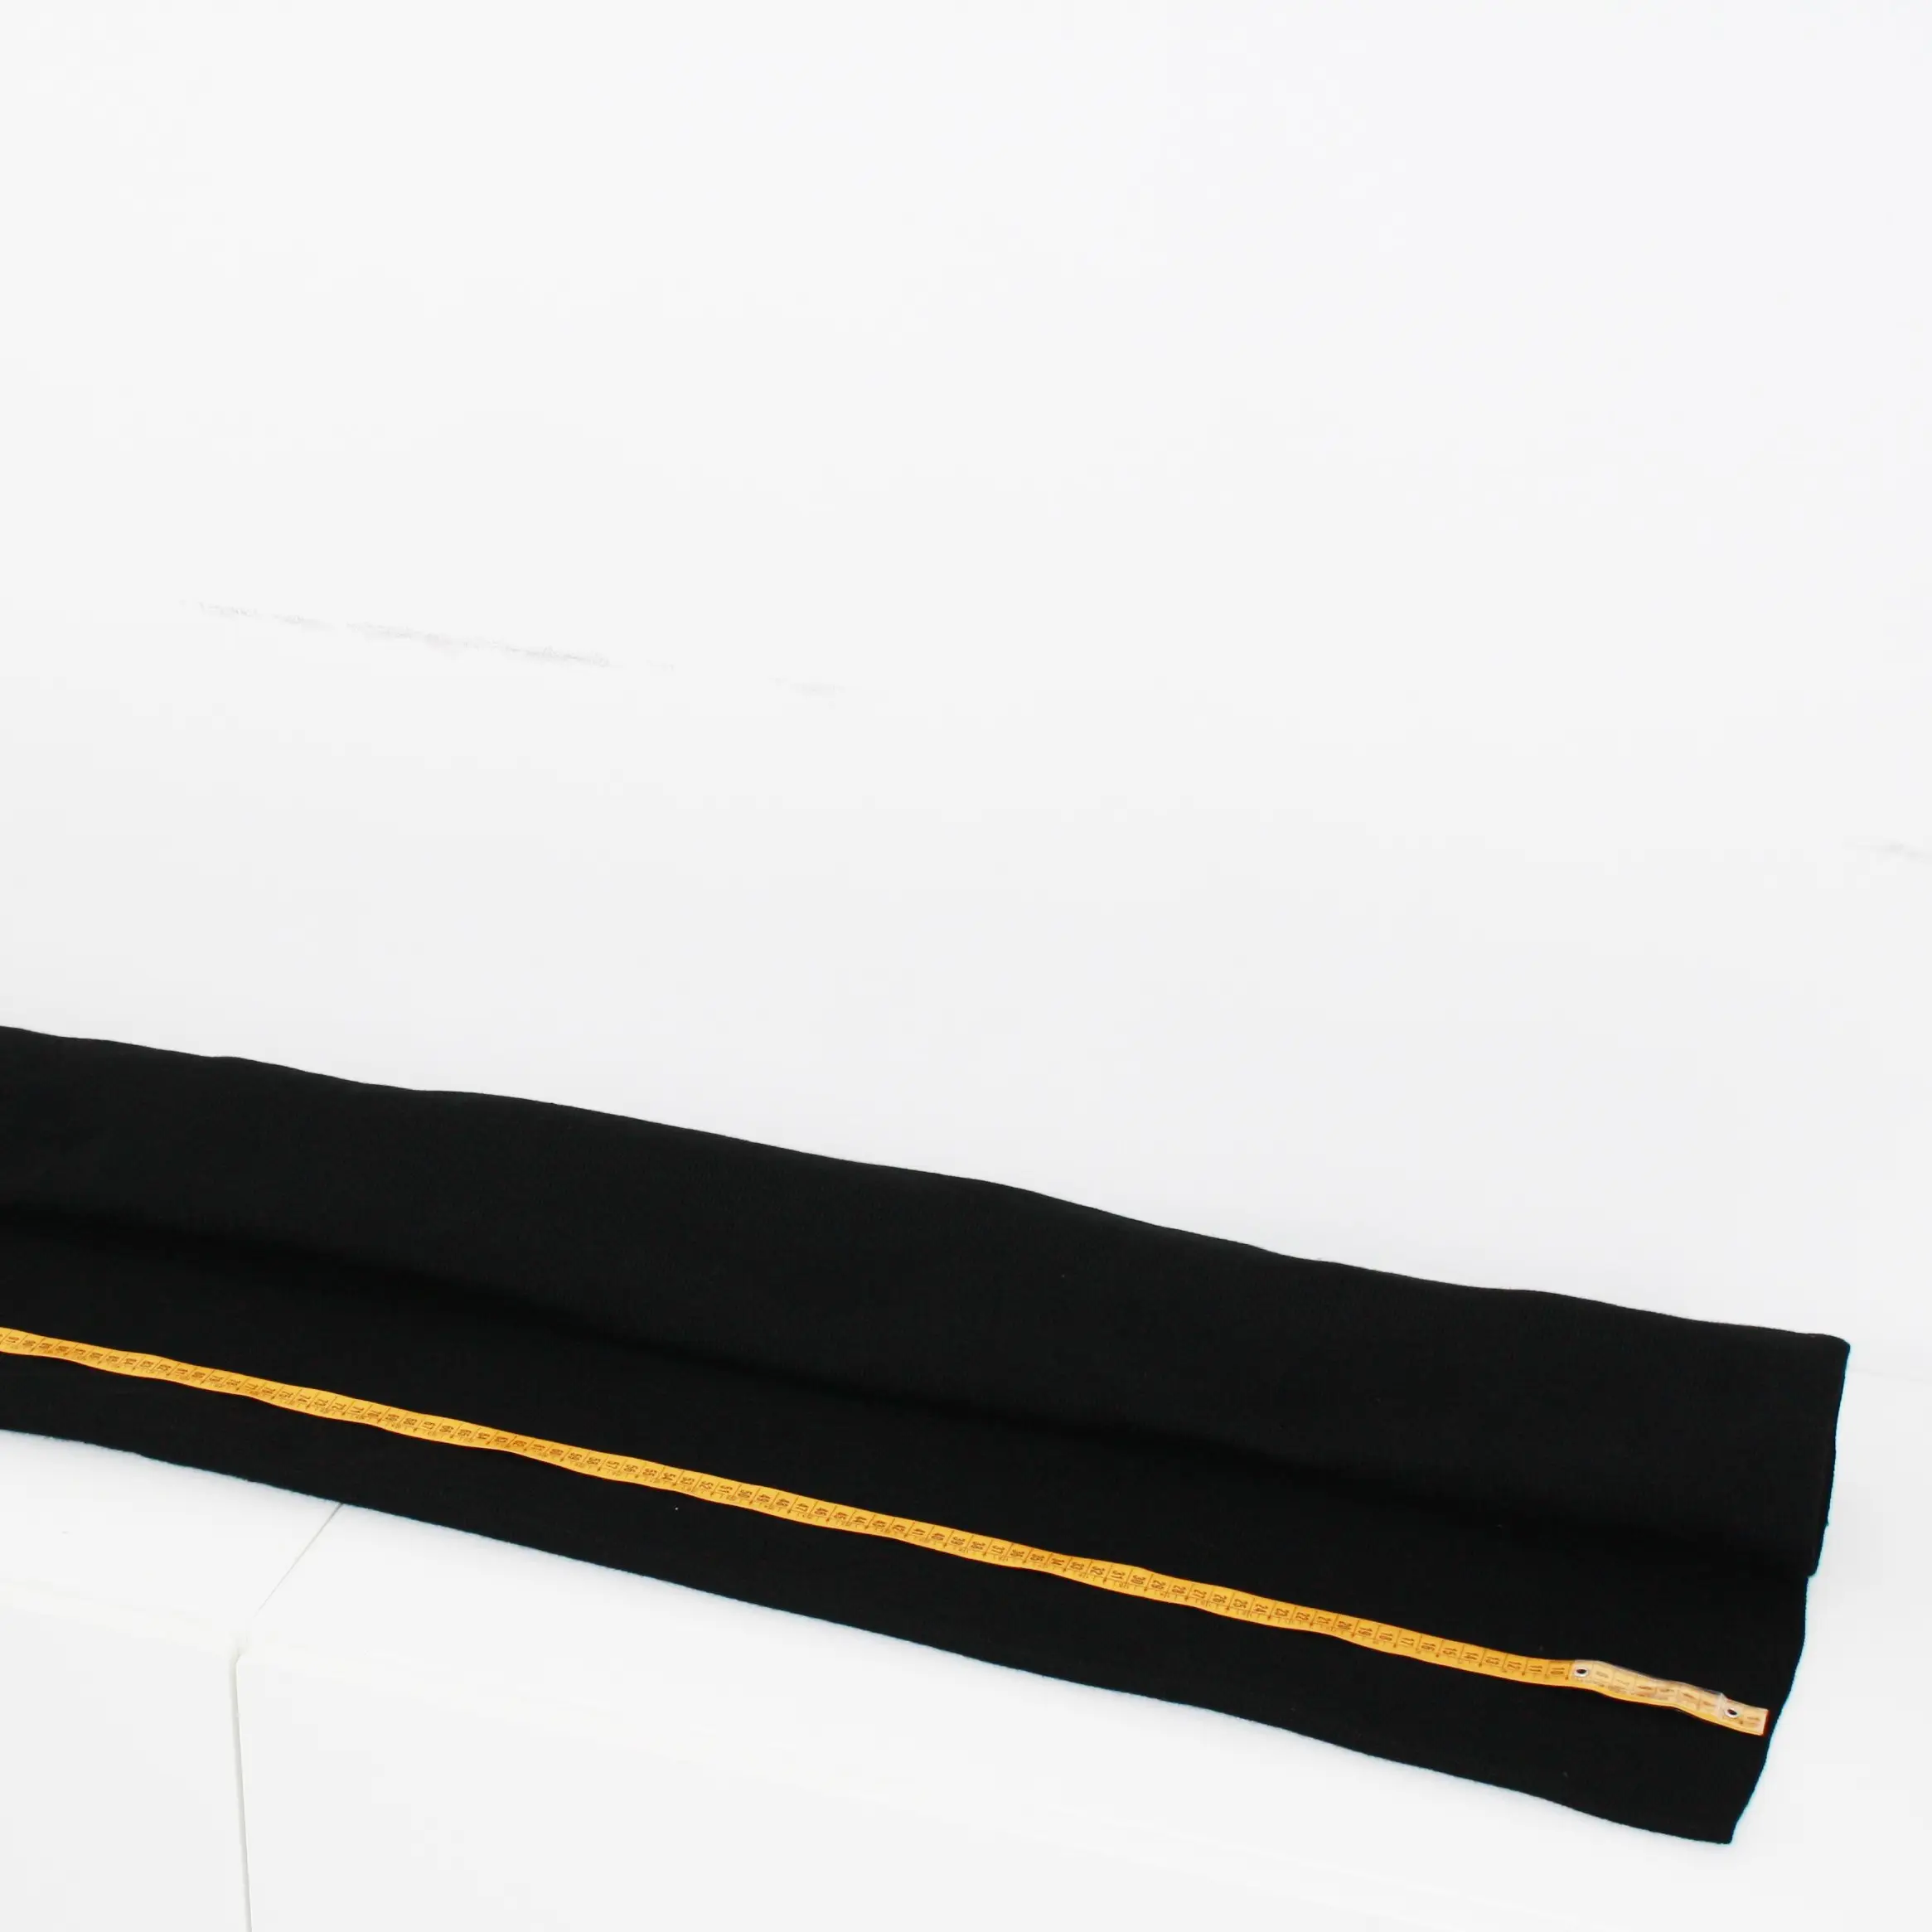 ITEM TSUXFP kualitas terbaik rajutan kain Italia tepi 7 tenun warna hitam akrilik dan poliester